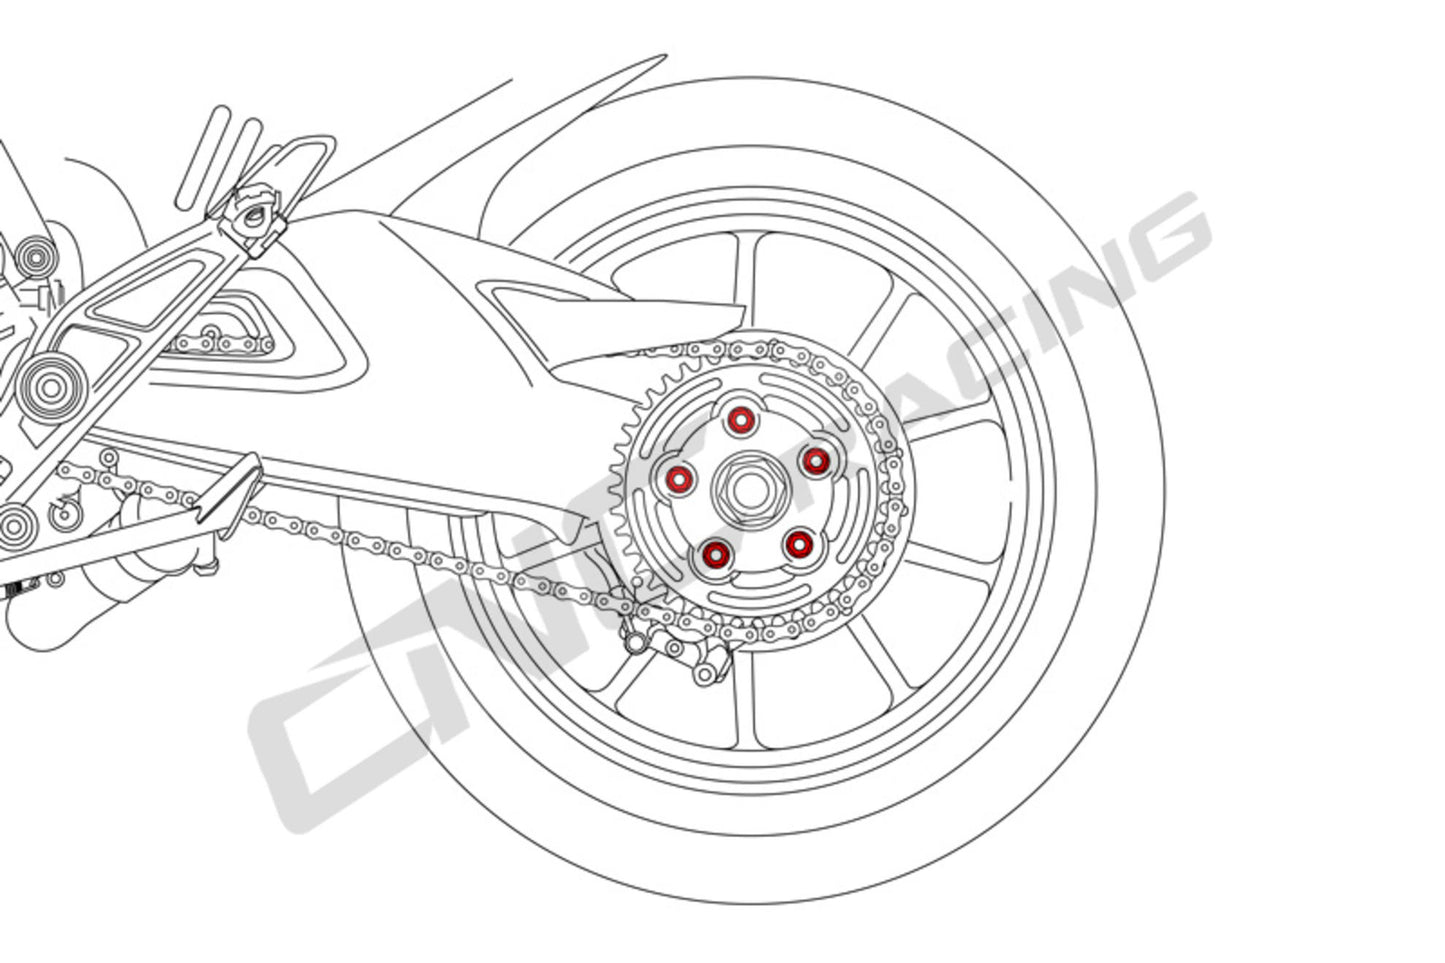 Ducati - Sprocket Nuts - Averys Motorcycles